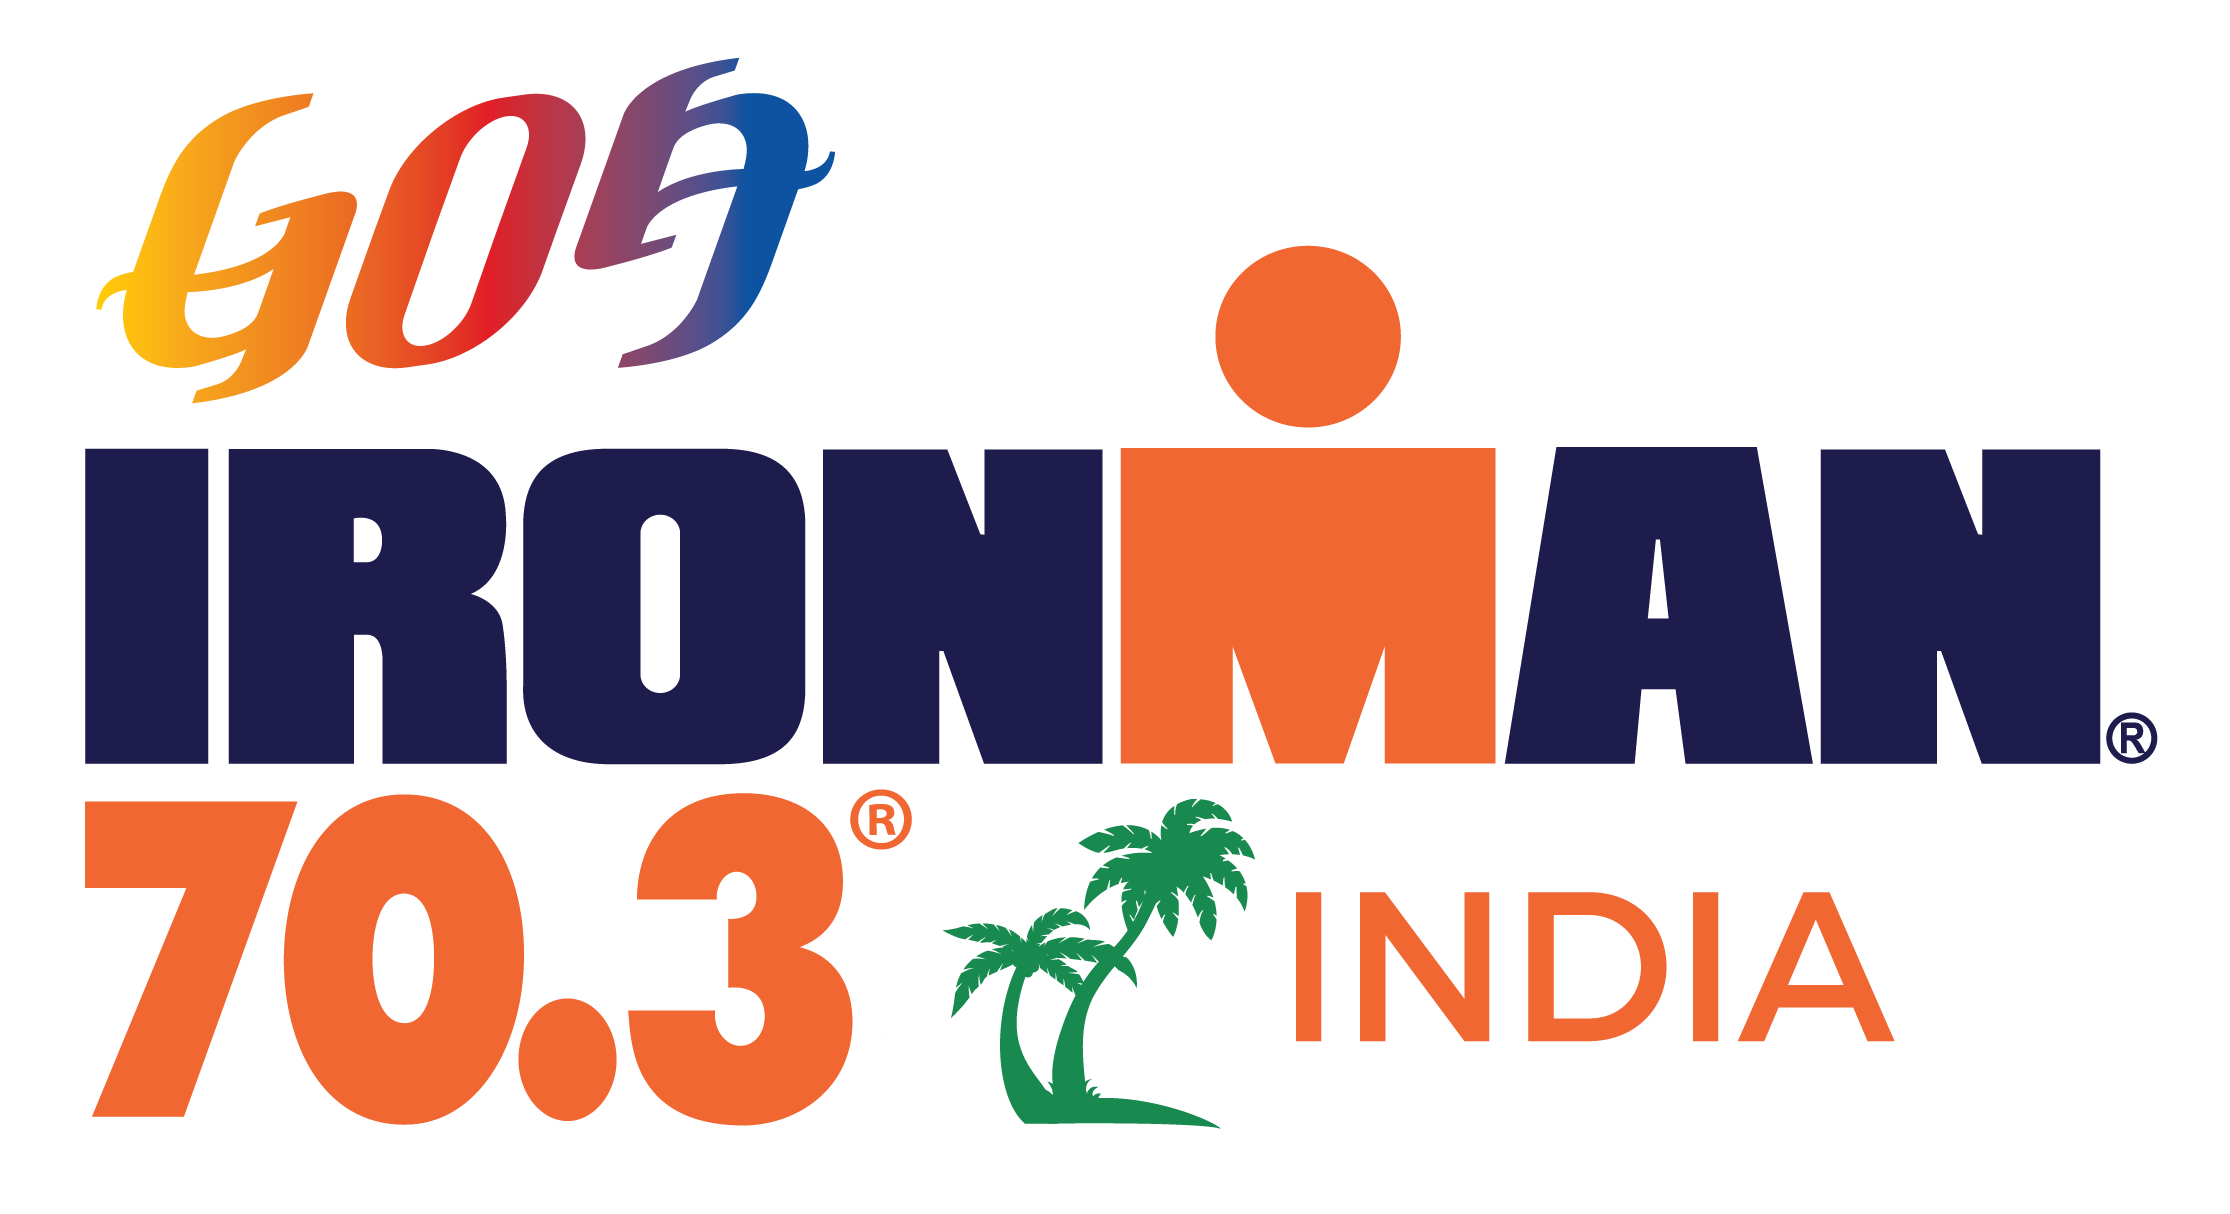 IRONMAN 70.3 Goa